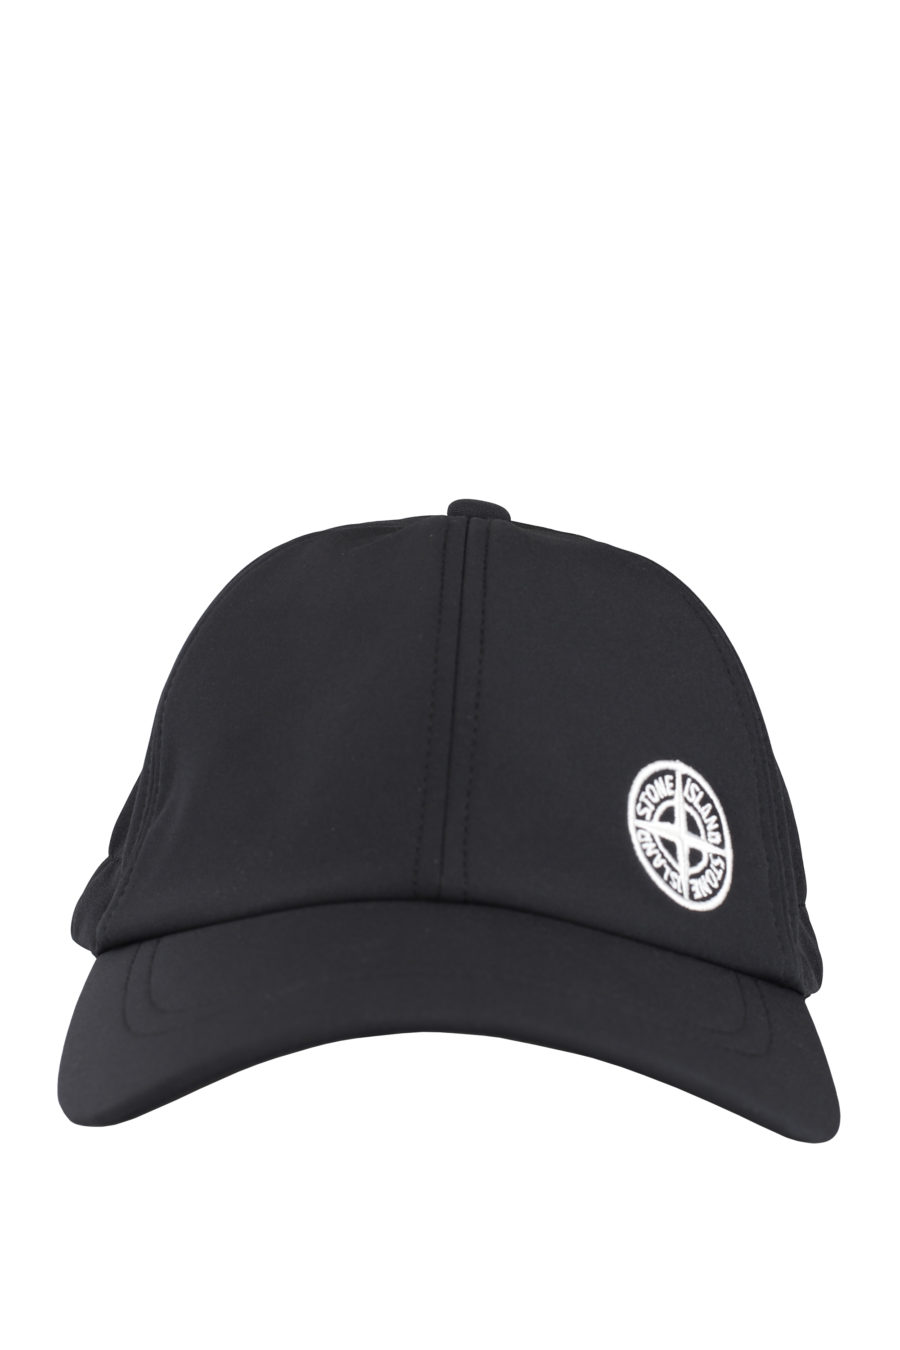 Gorra negra con logotipo bordado blanco - IMG 9731